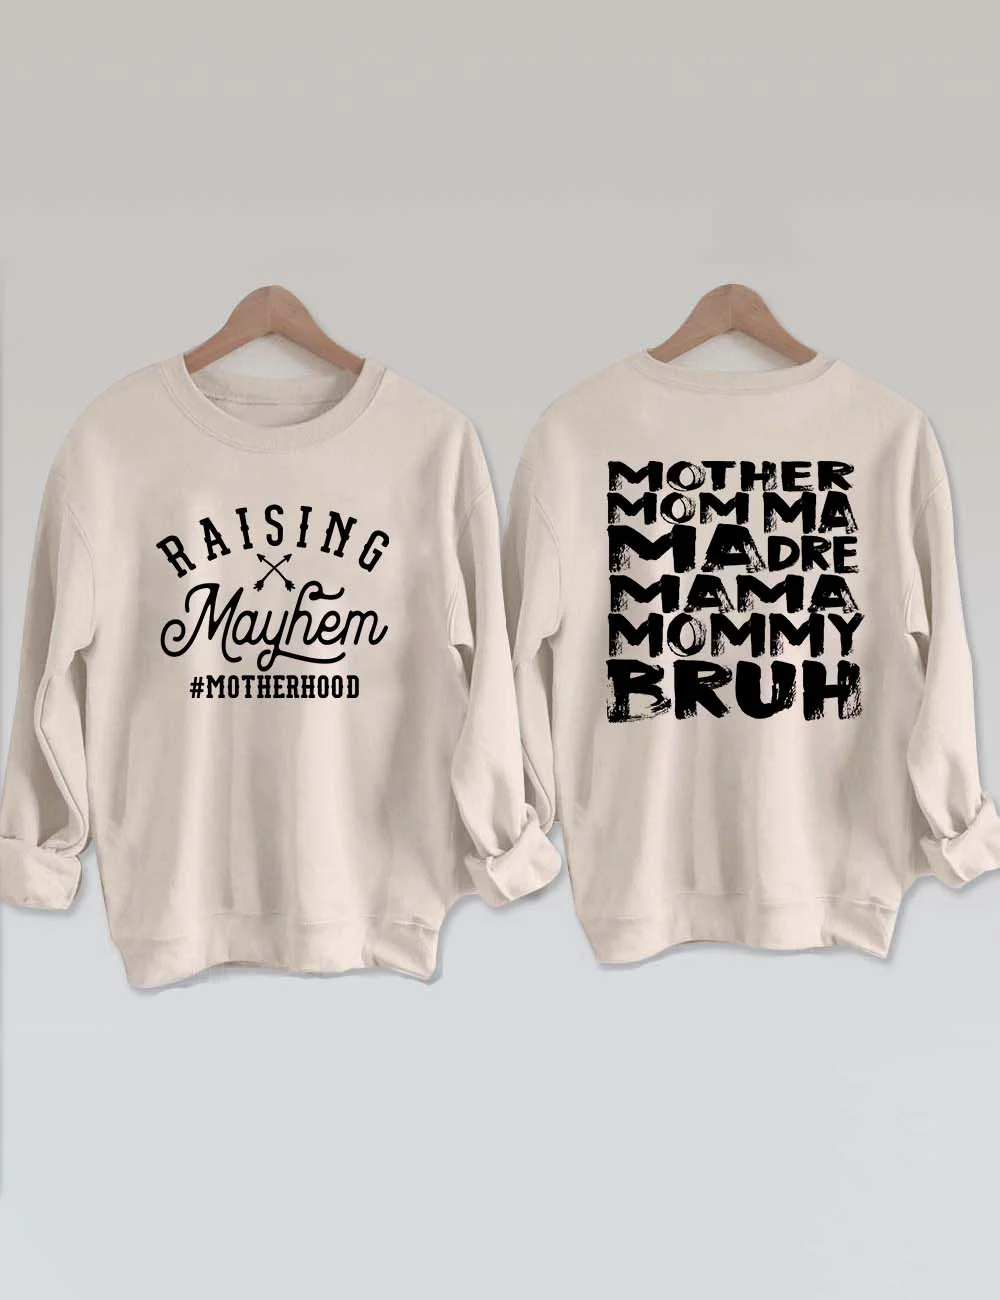 Raising Mayhem Motherhood Sweatshirt